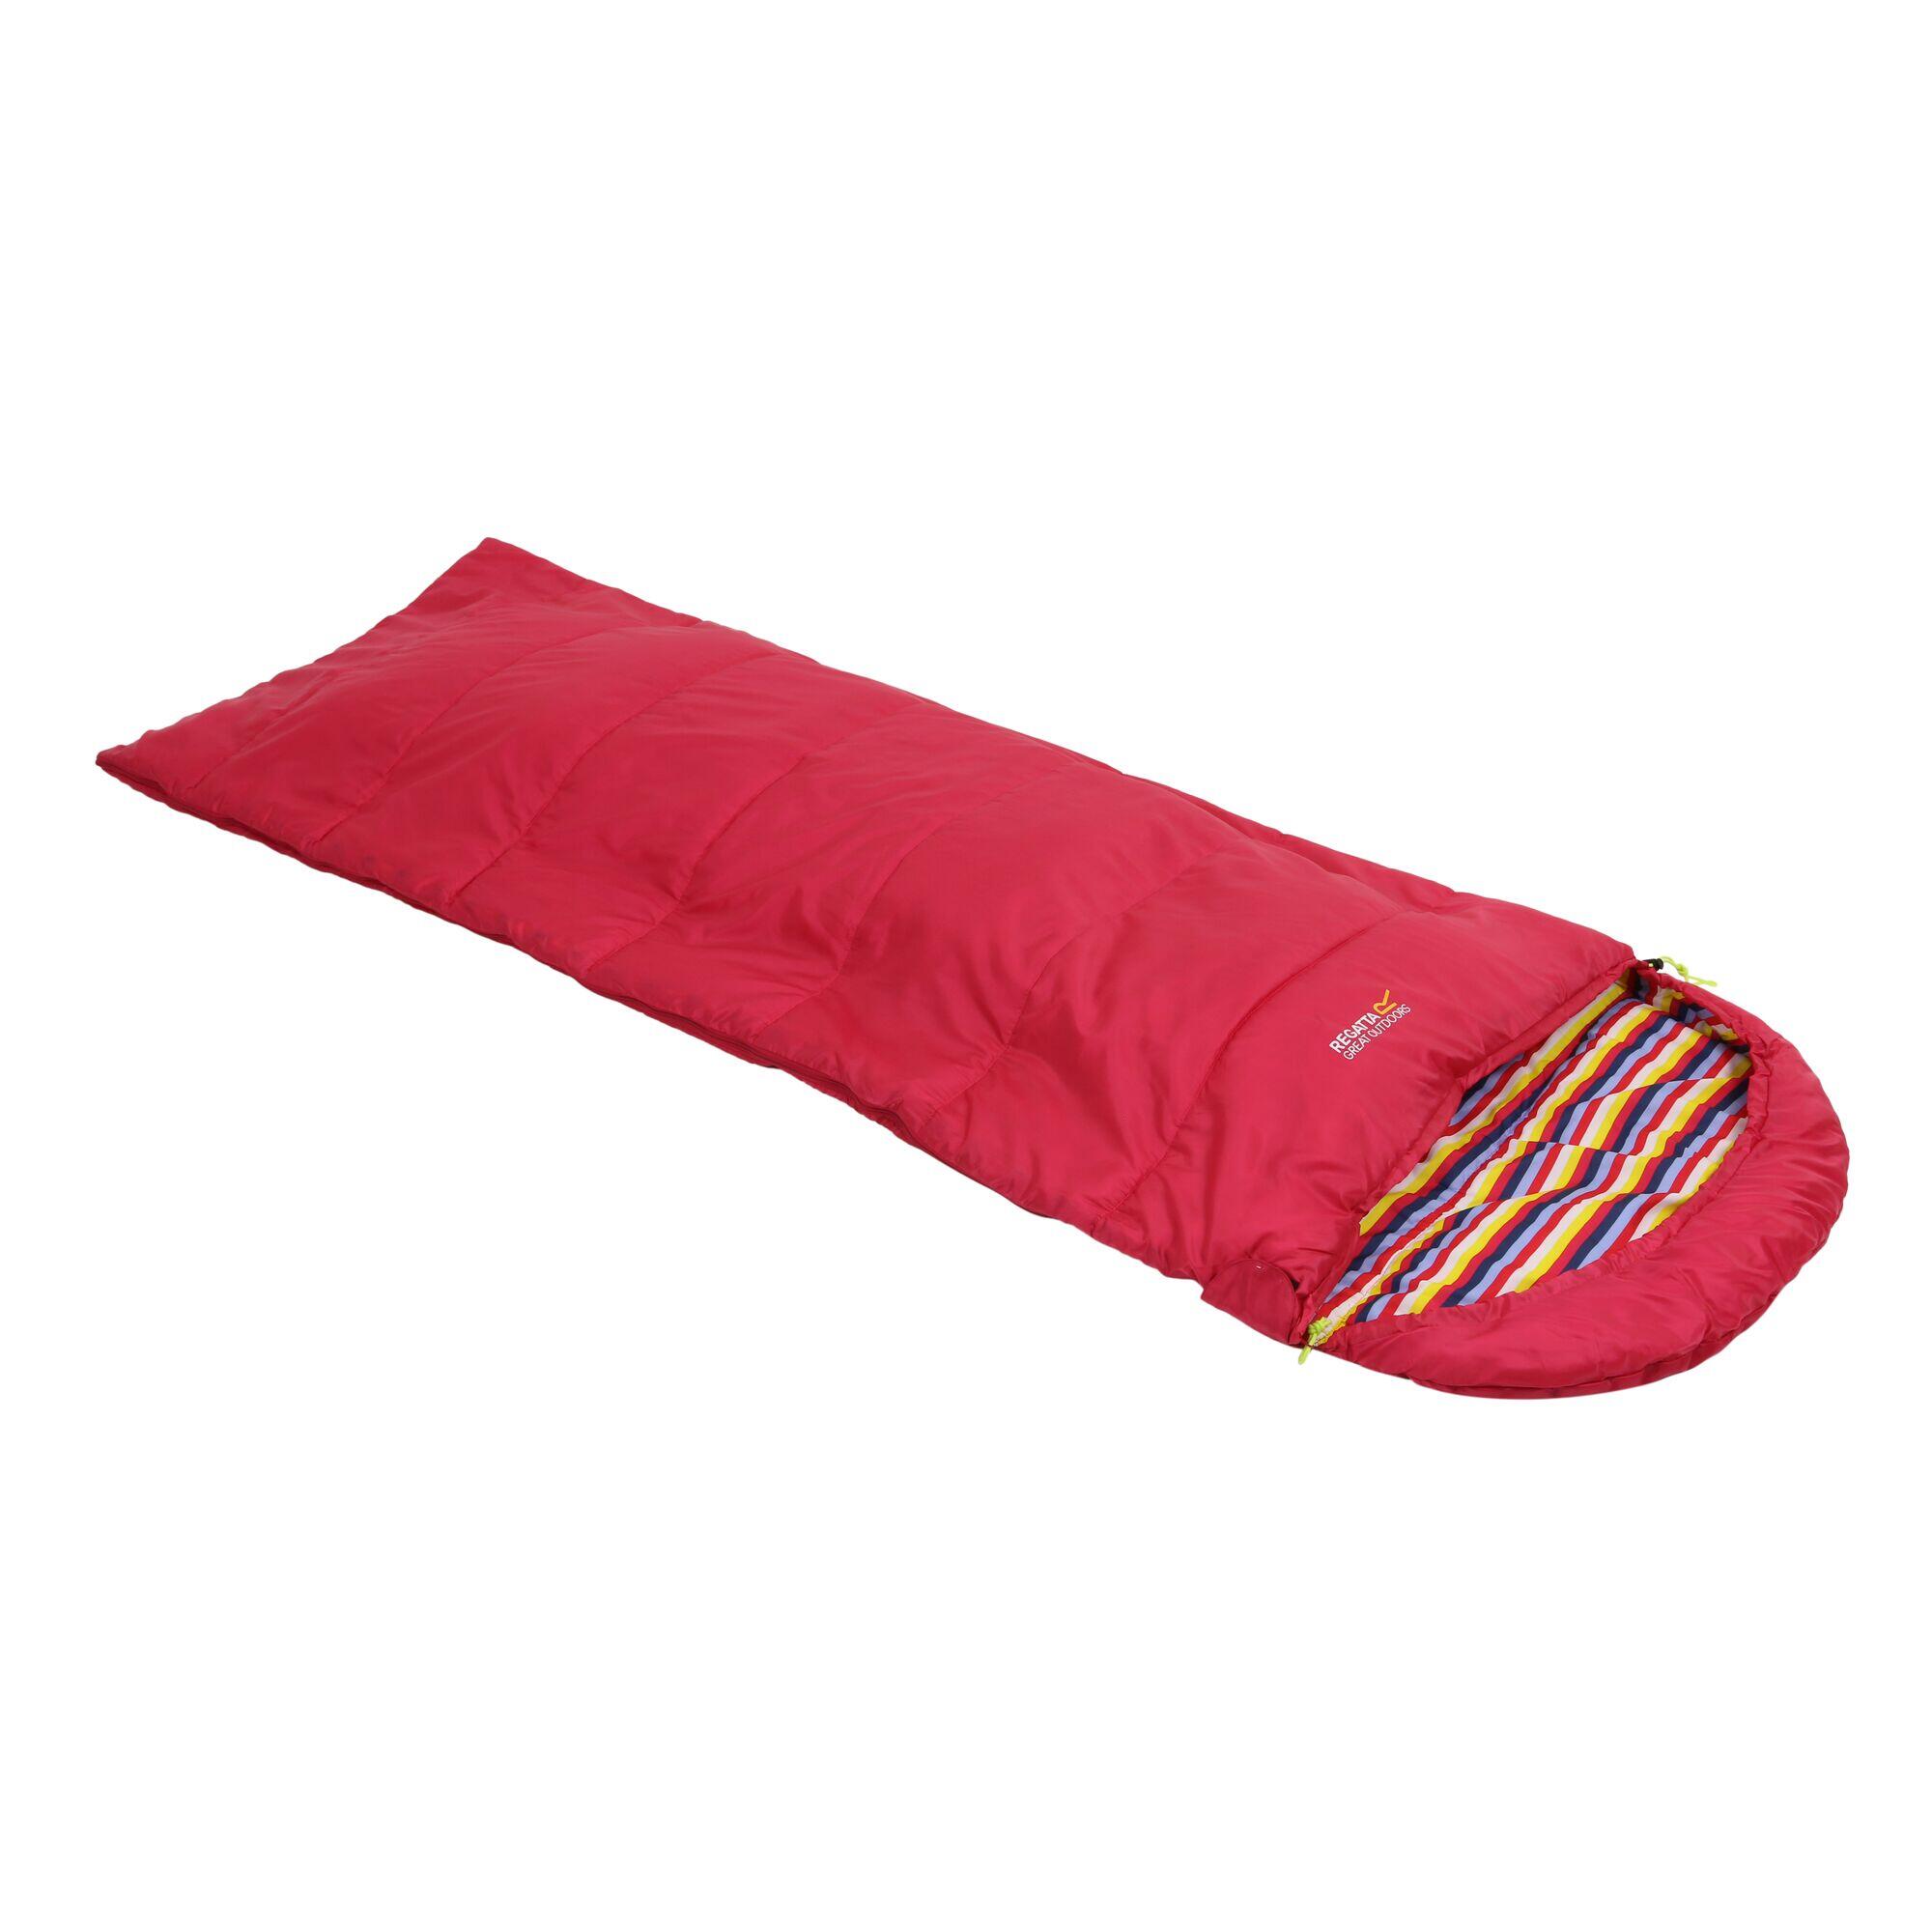 Hana 200 Polyester Mummy Sleeping Bag (Duchess Pink Stripe) 1/4